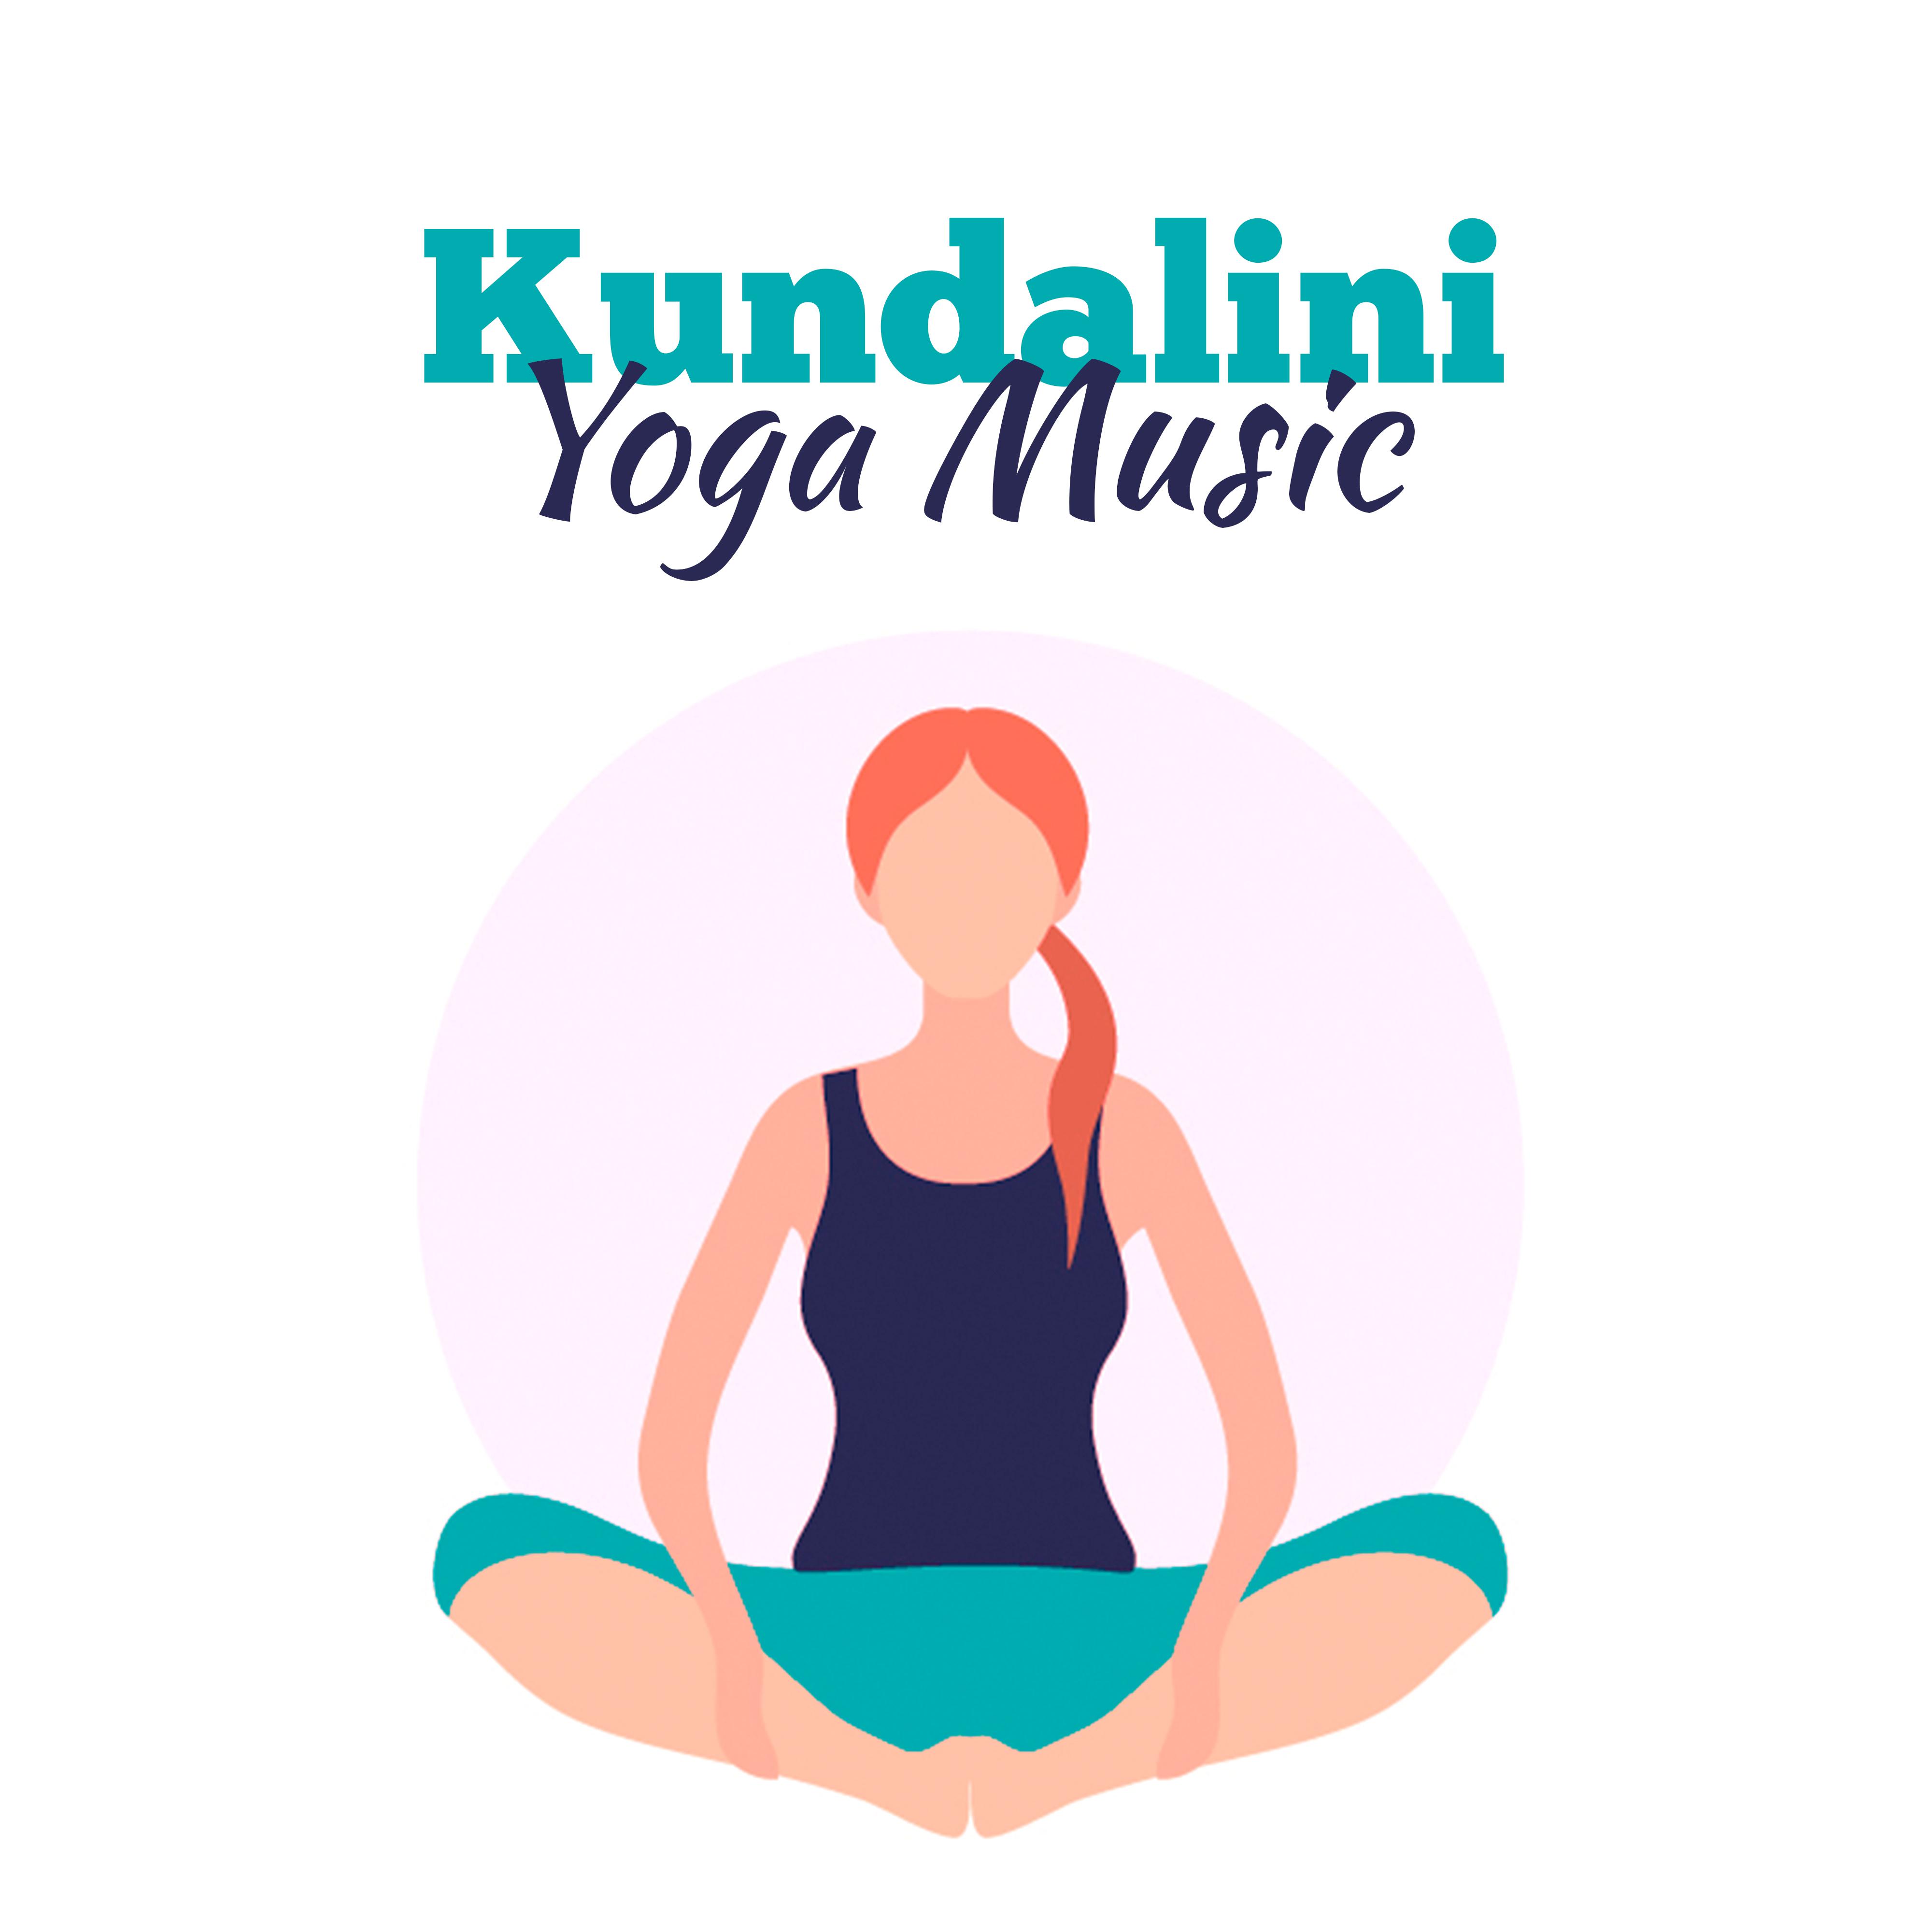 Kundalini Yoga Music